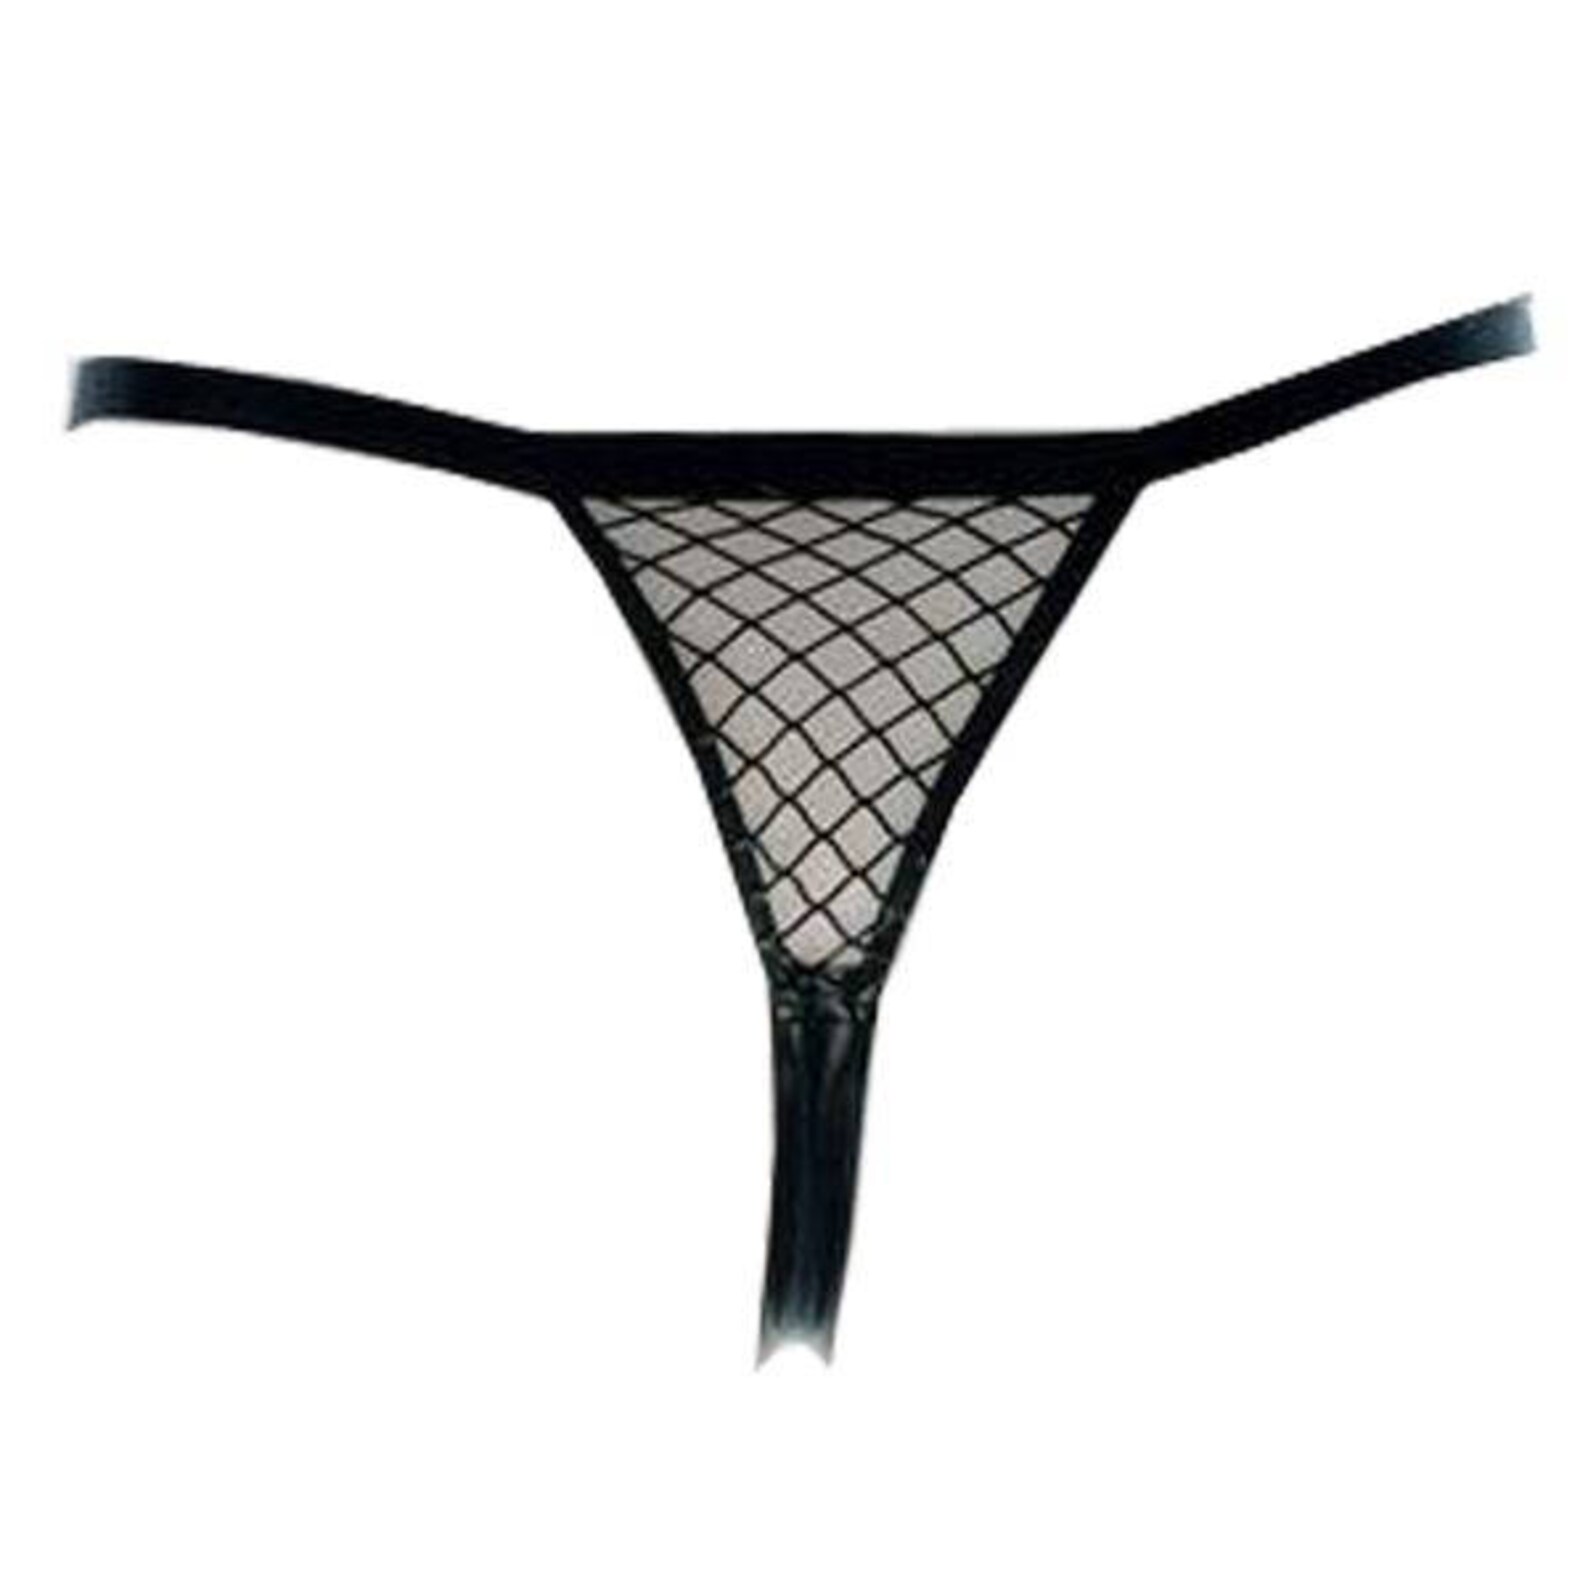 Ebony period panties with black fishnet